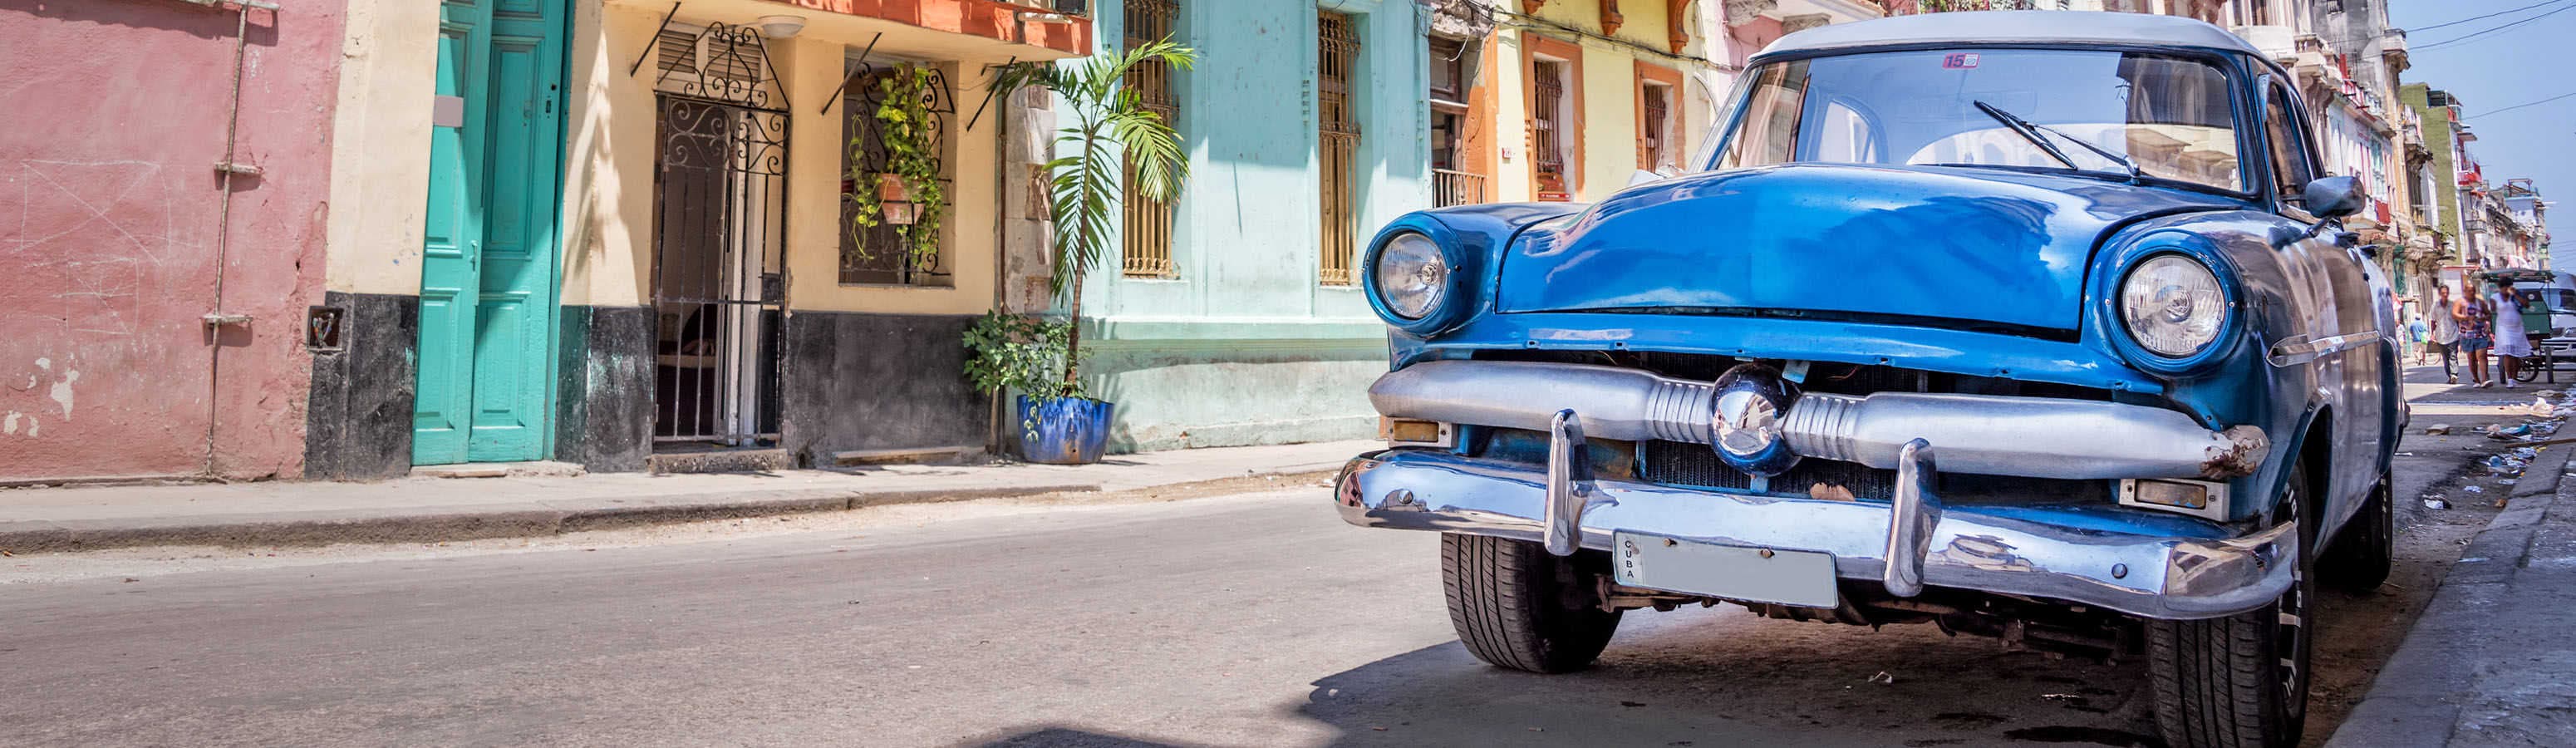 Cuba - trip for veterans